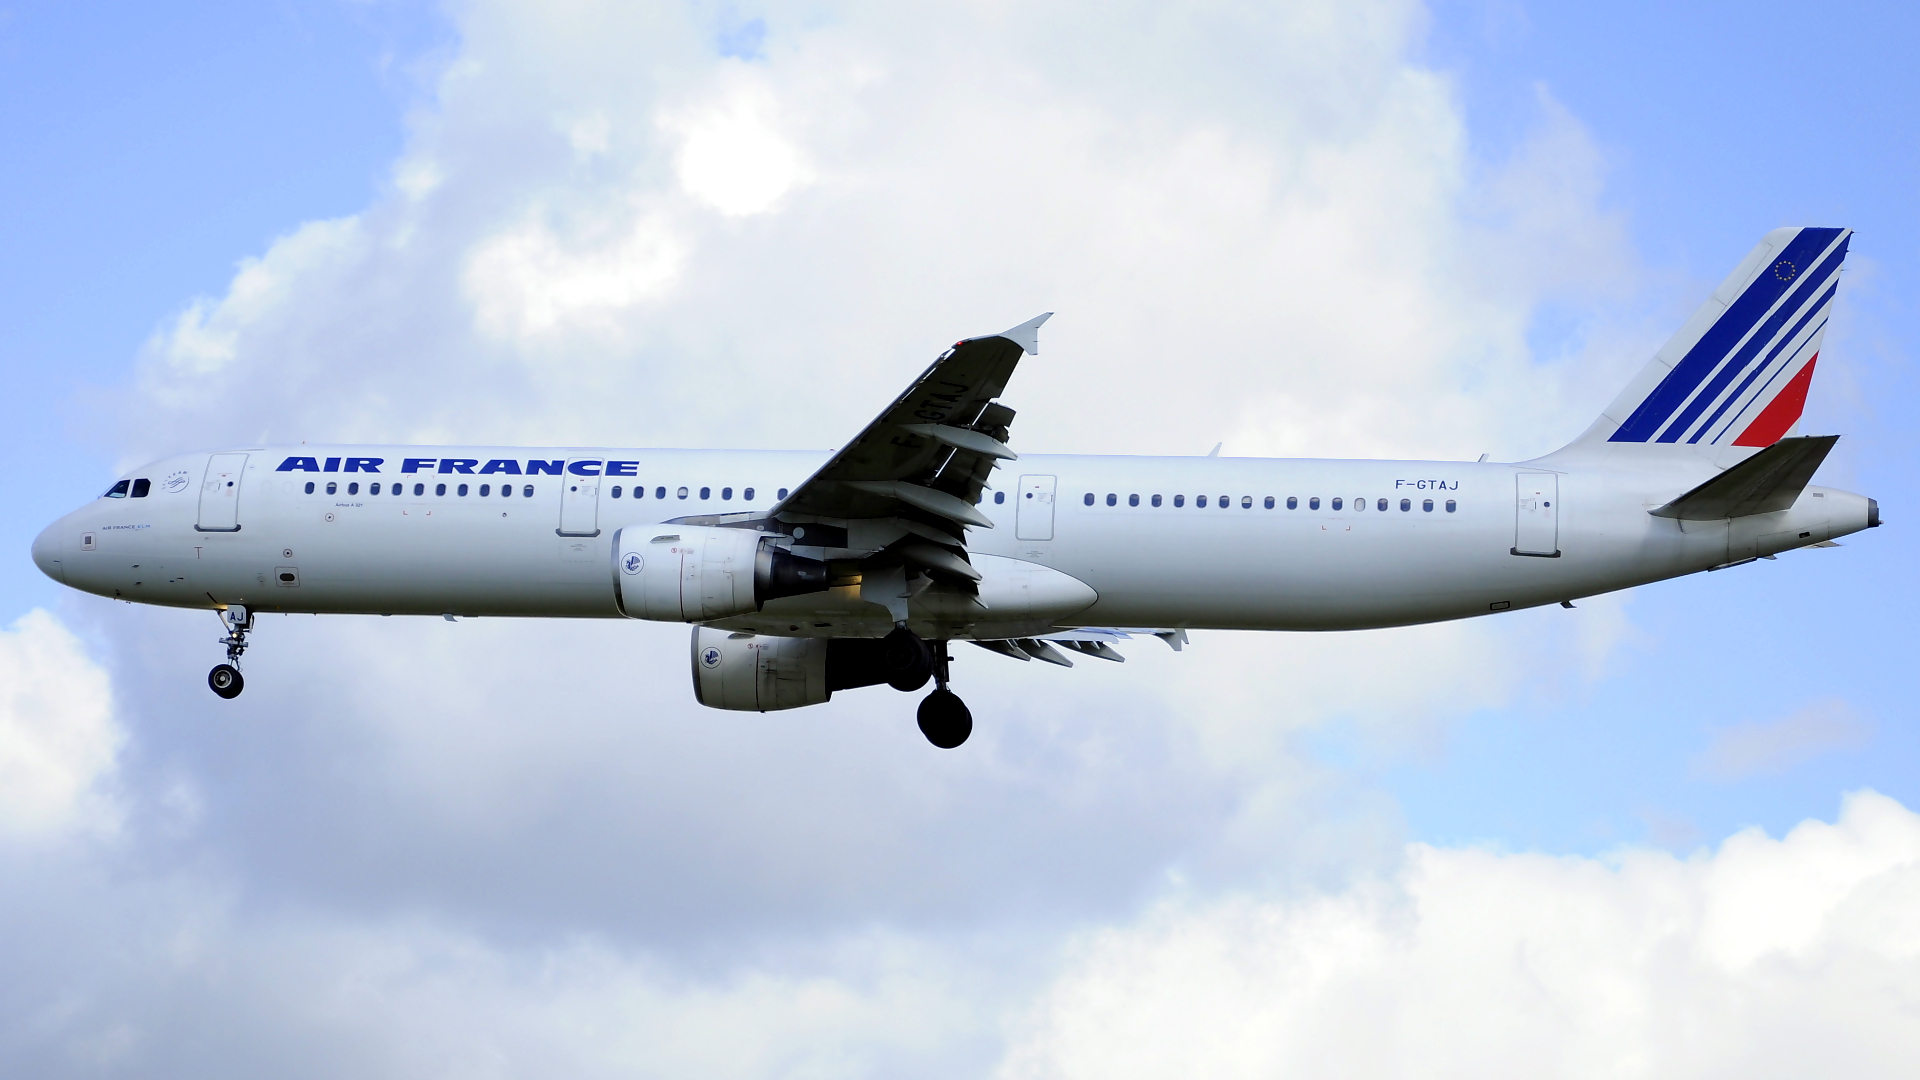 F-GTAJ ✈ Air France Airbus 321-212 @ London-Heathrow